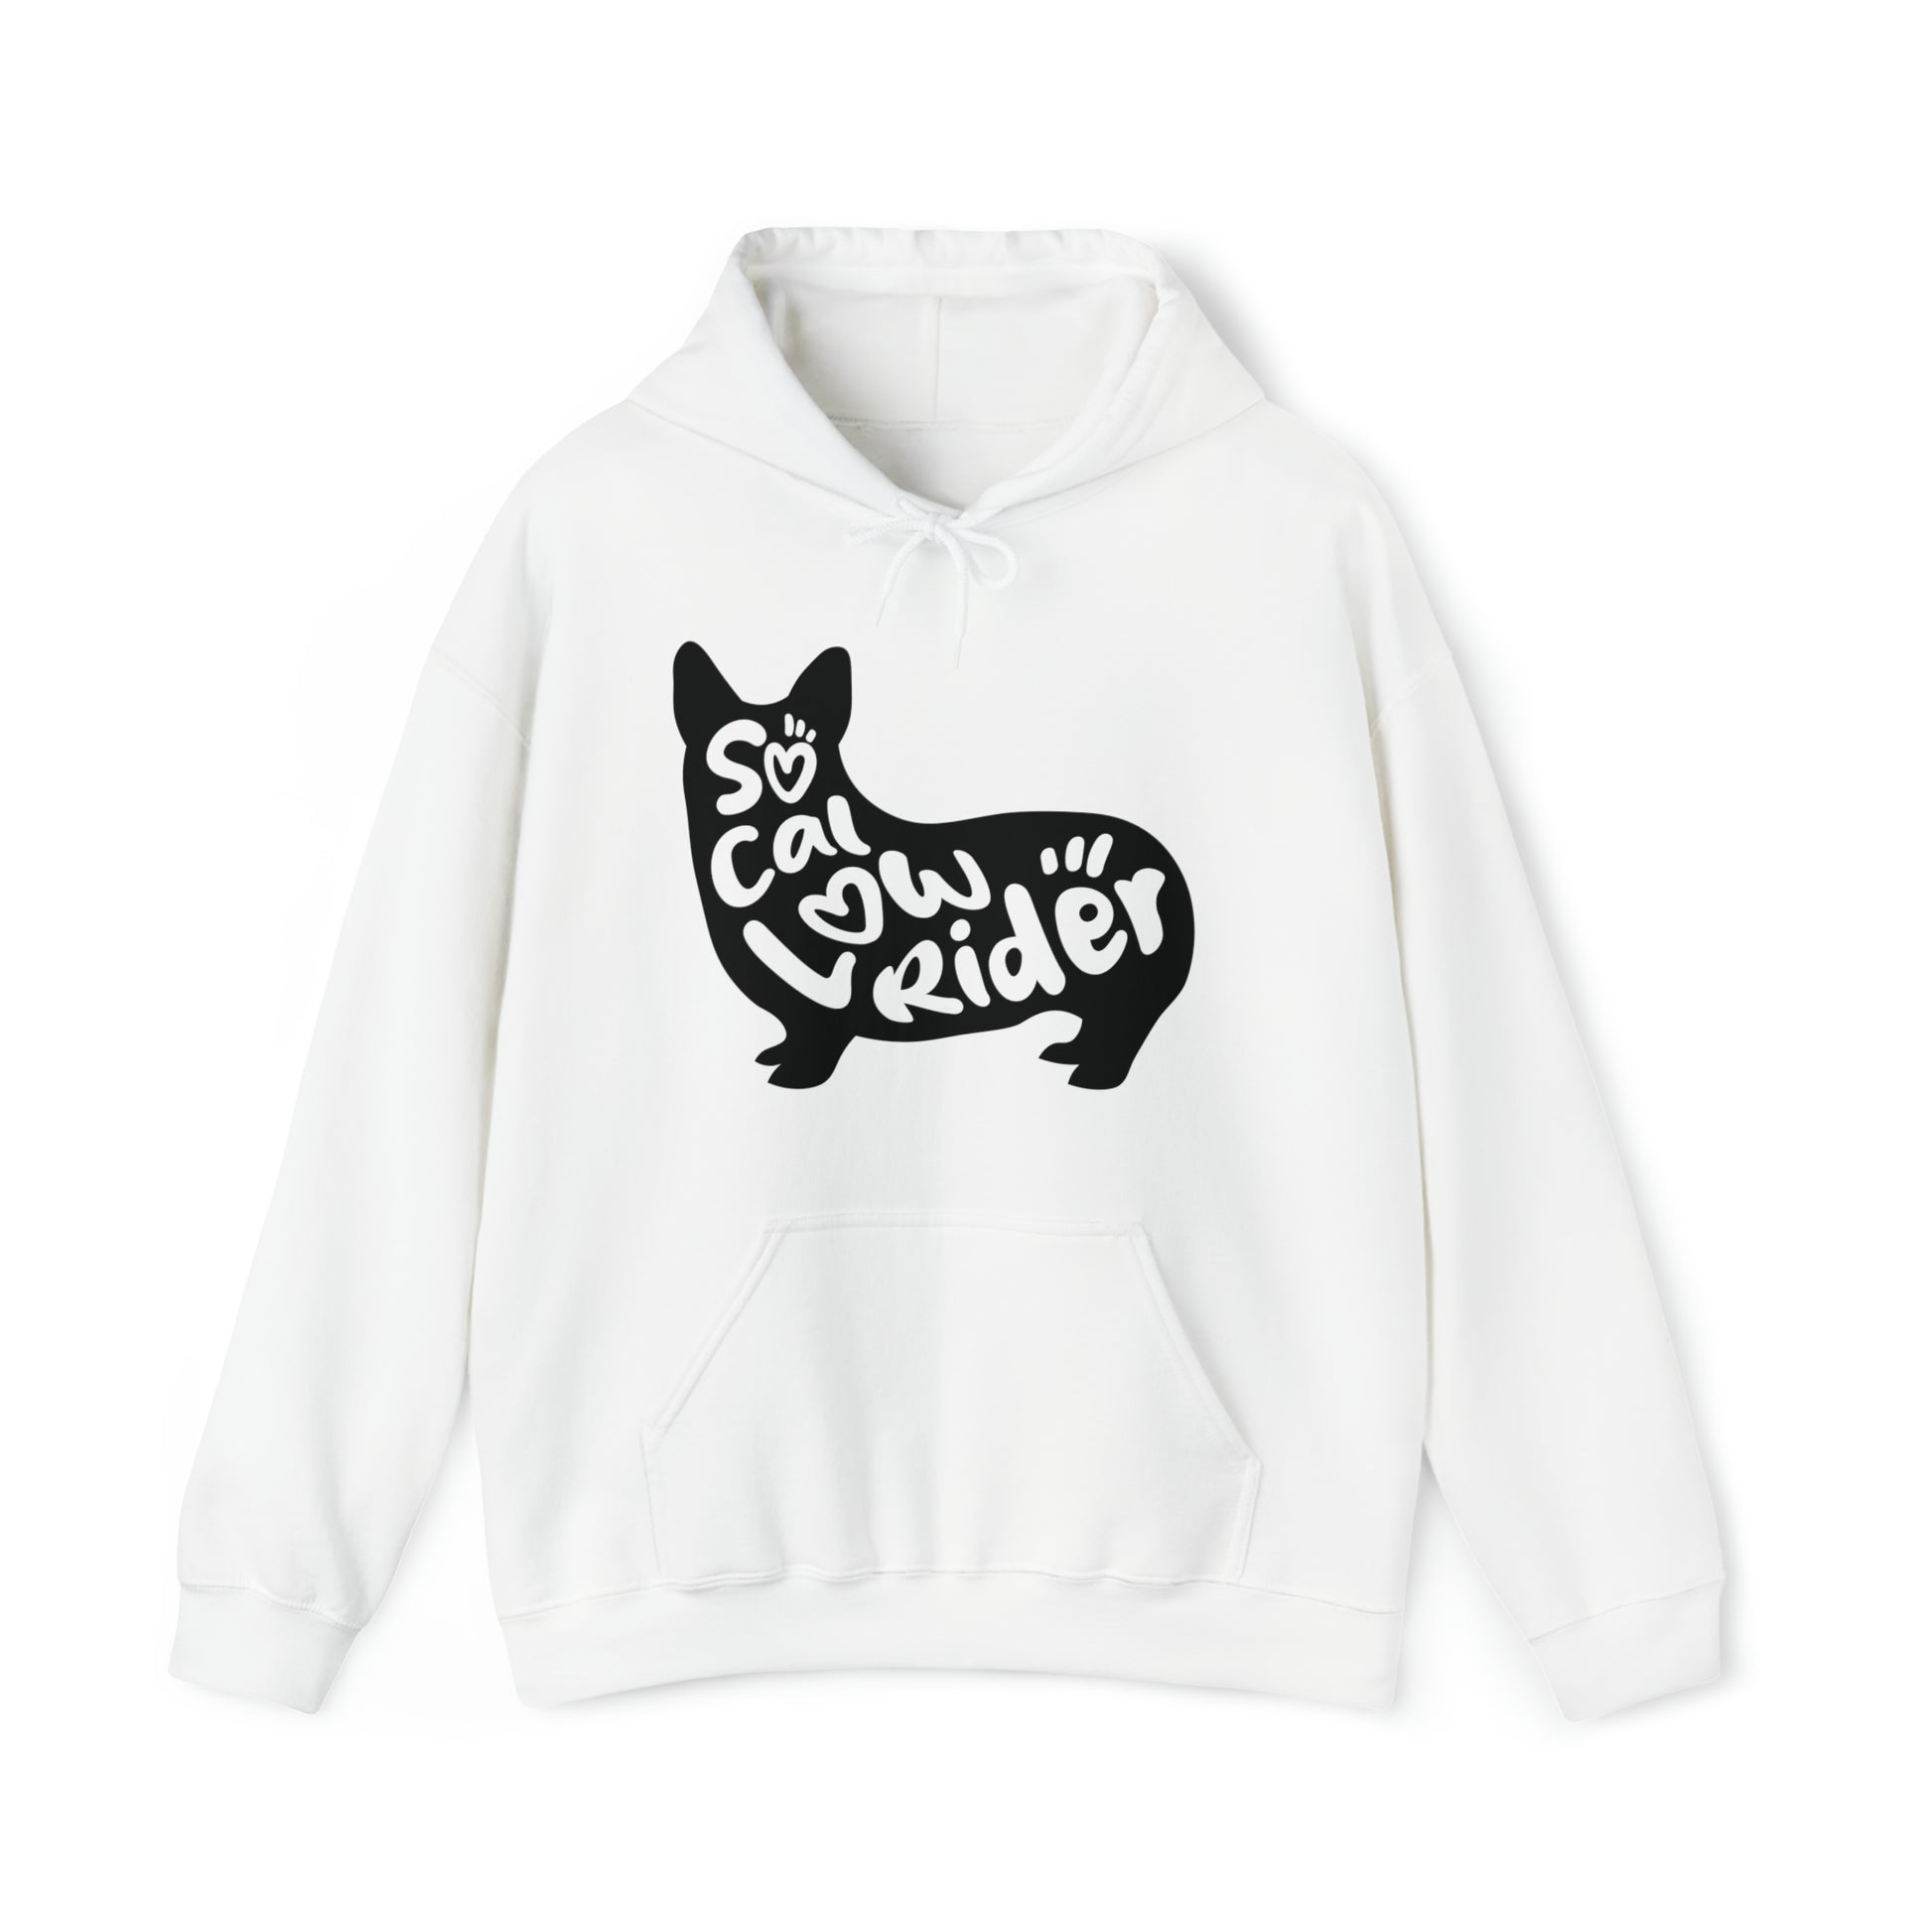 white SoCal LowRider Southern California corgi dog hoodie sweatshirt